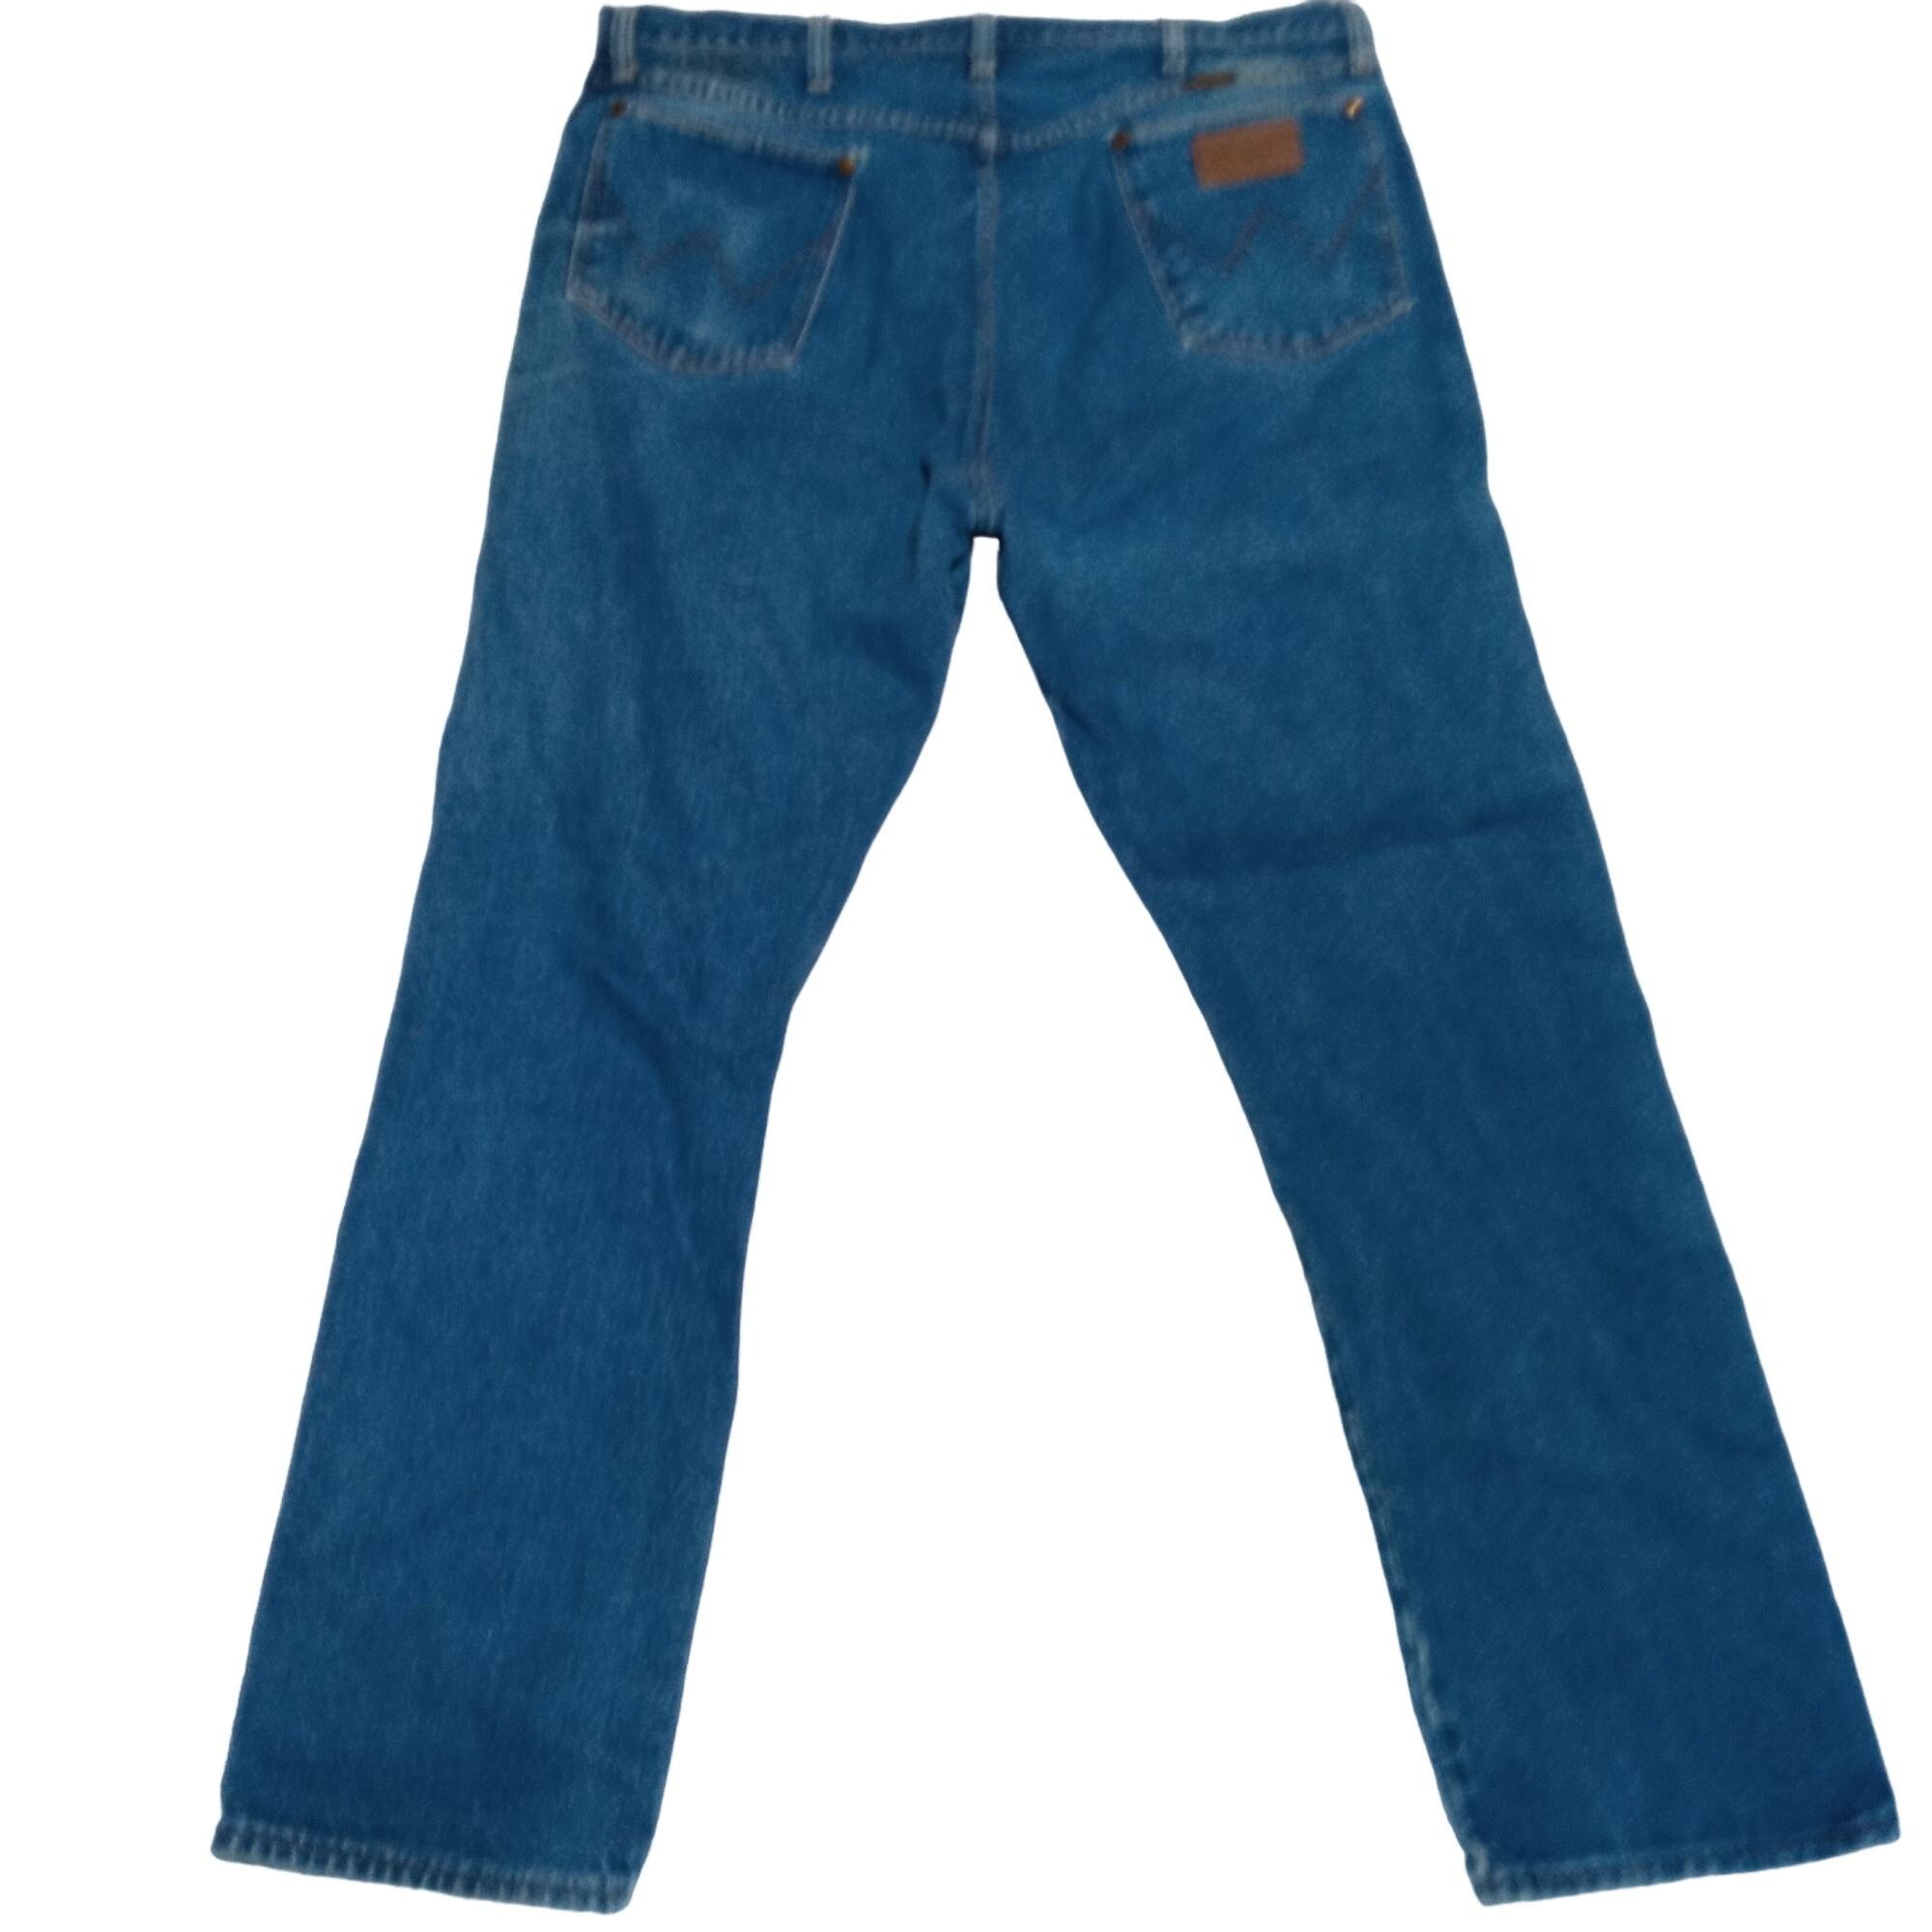 Wrangler Vintage Wrangler Mens Blue Jeans 37 x 28 Faded Worn Denim Co Size US 37 - 3 Thumbnail